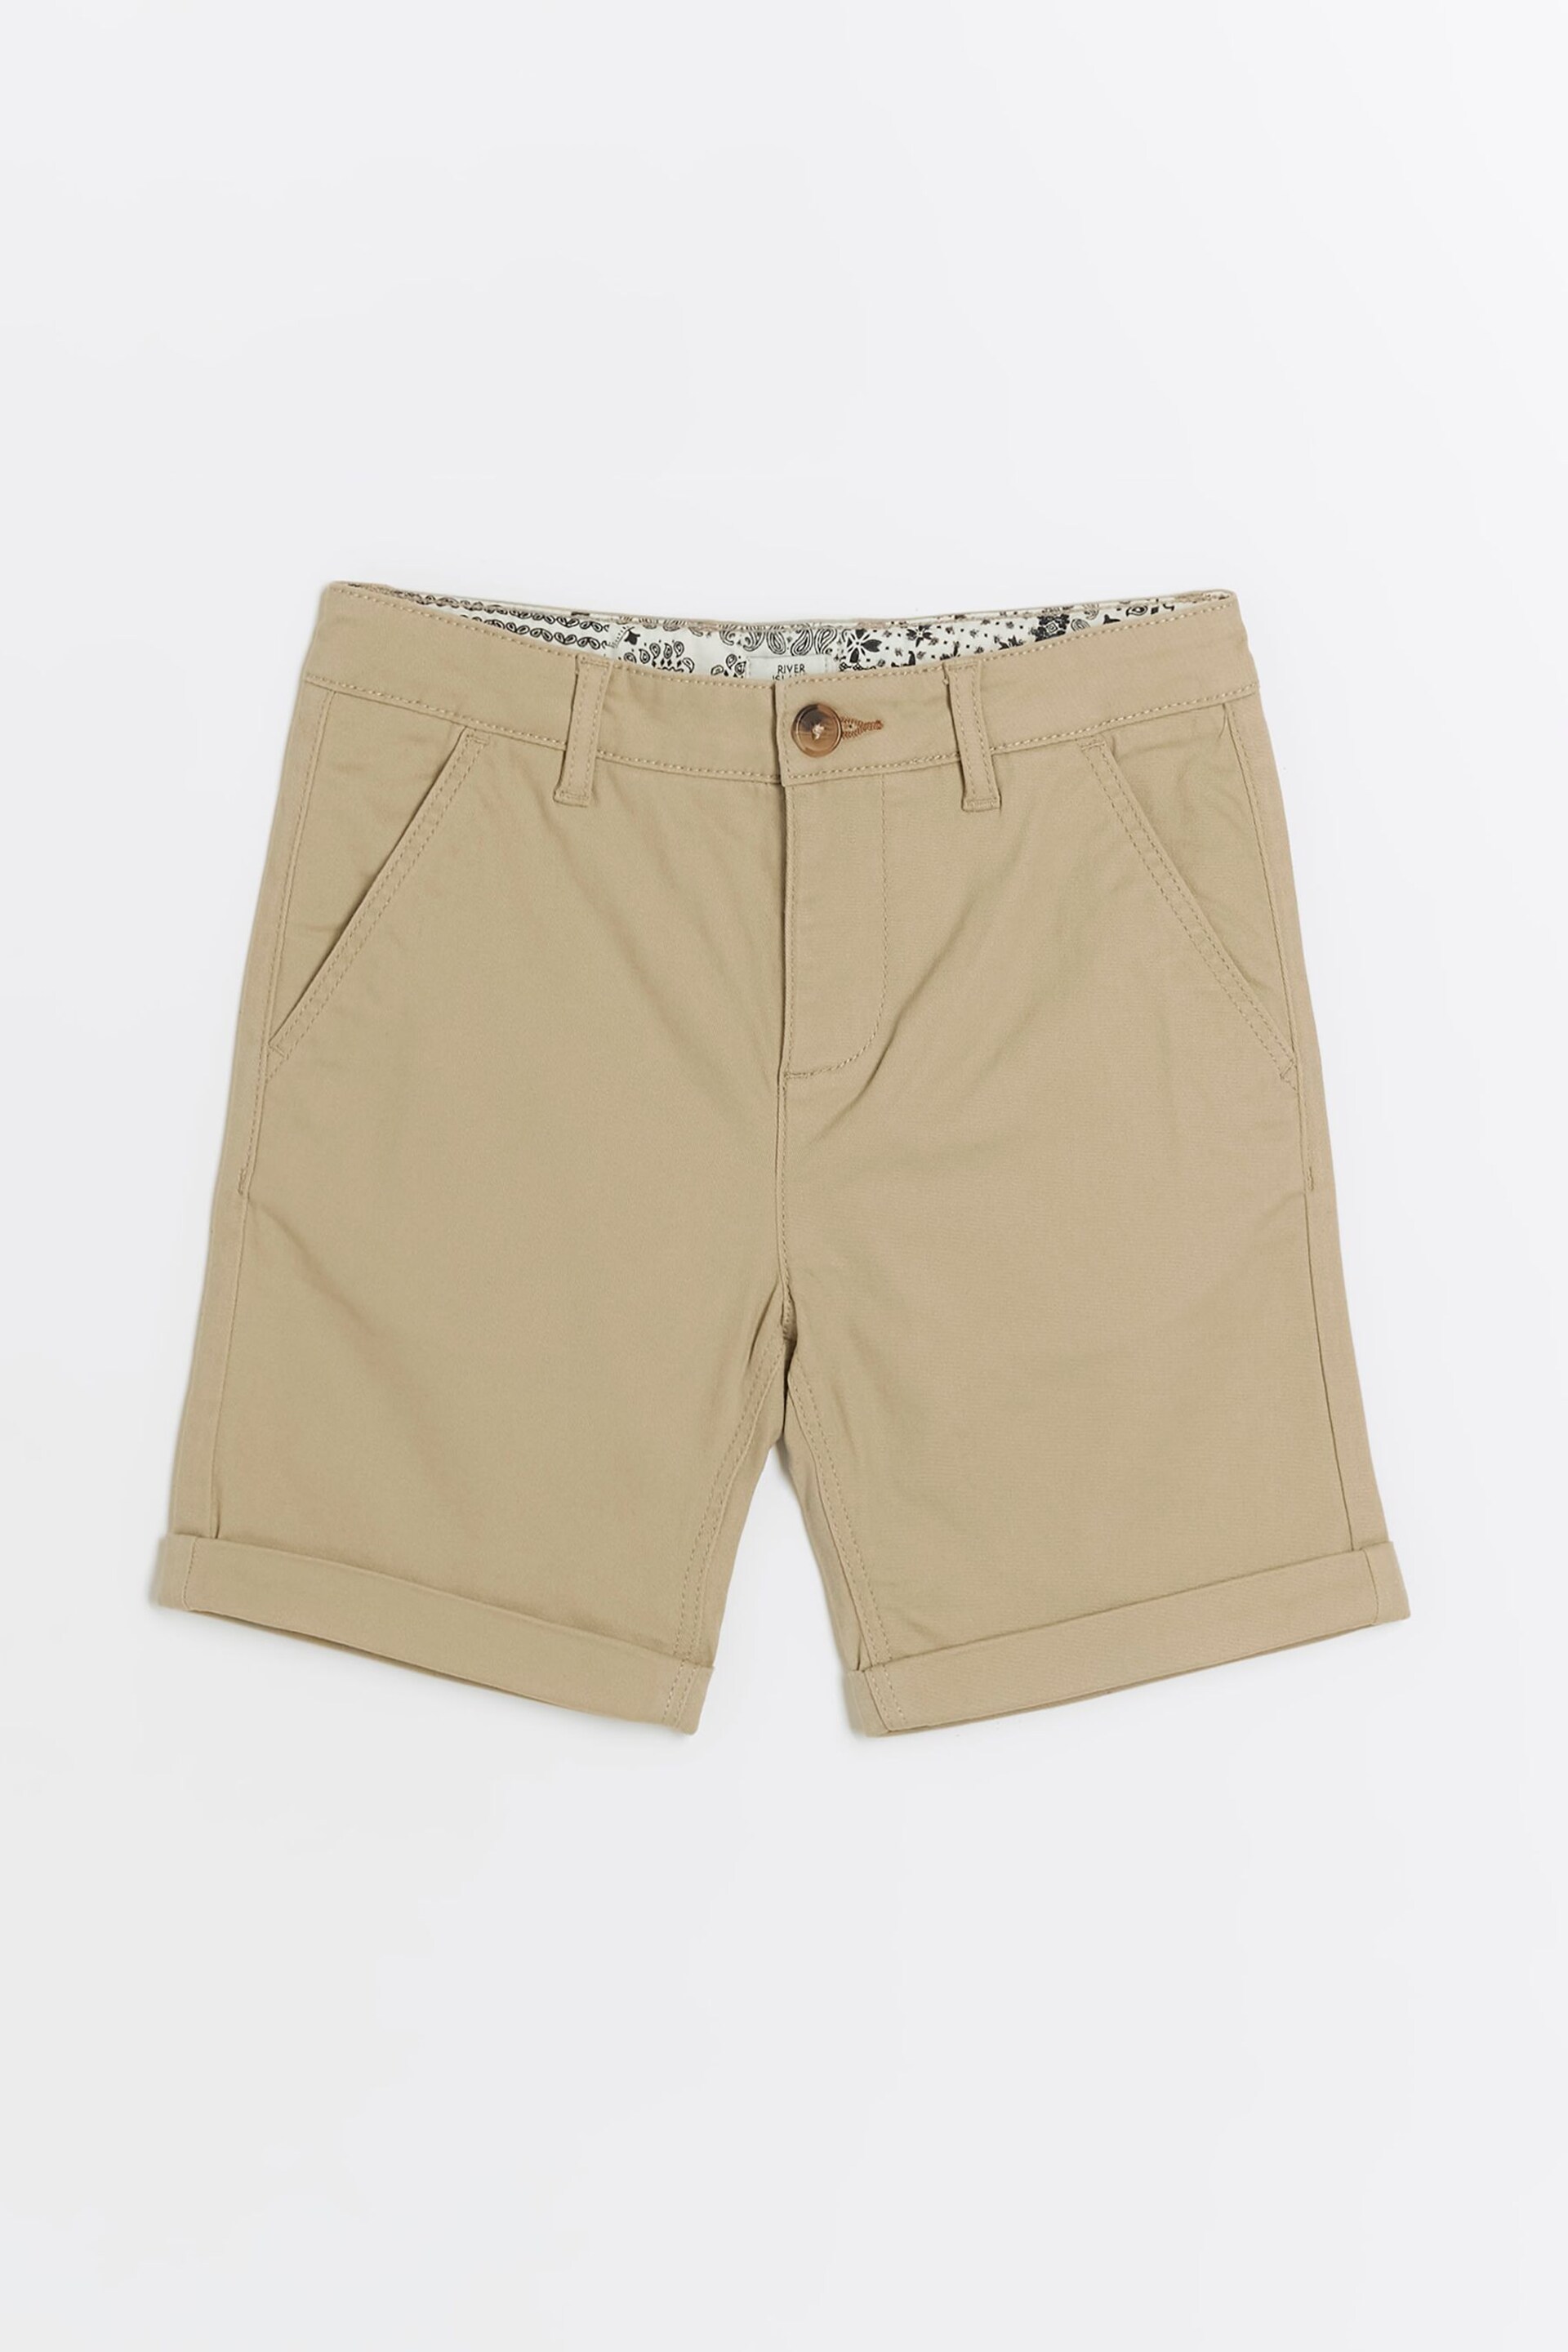 River Island Natural Boys Laundered Chino Shorts - Image 1 of 4